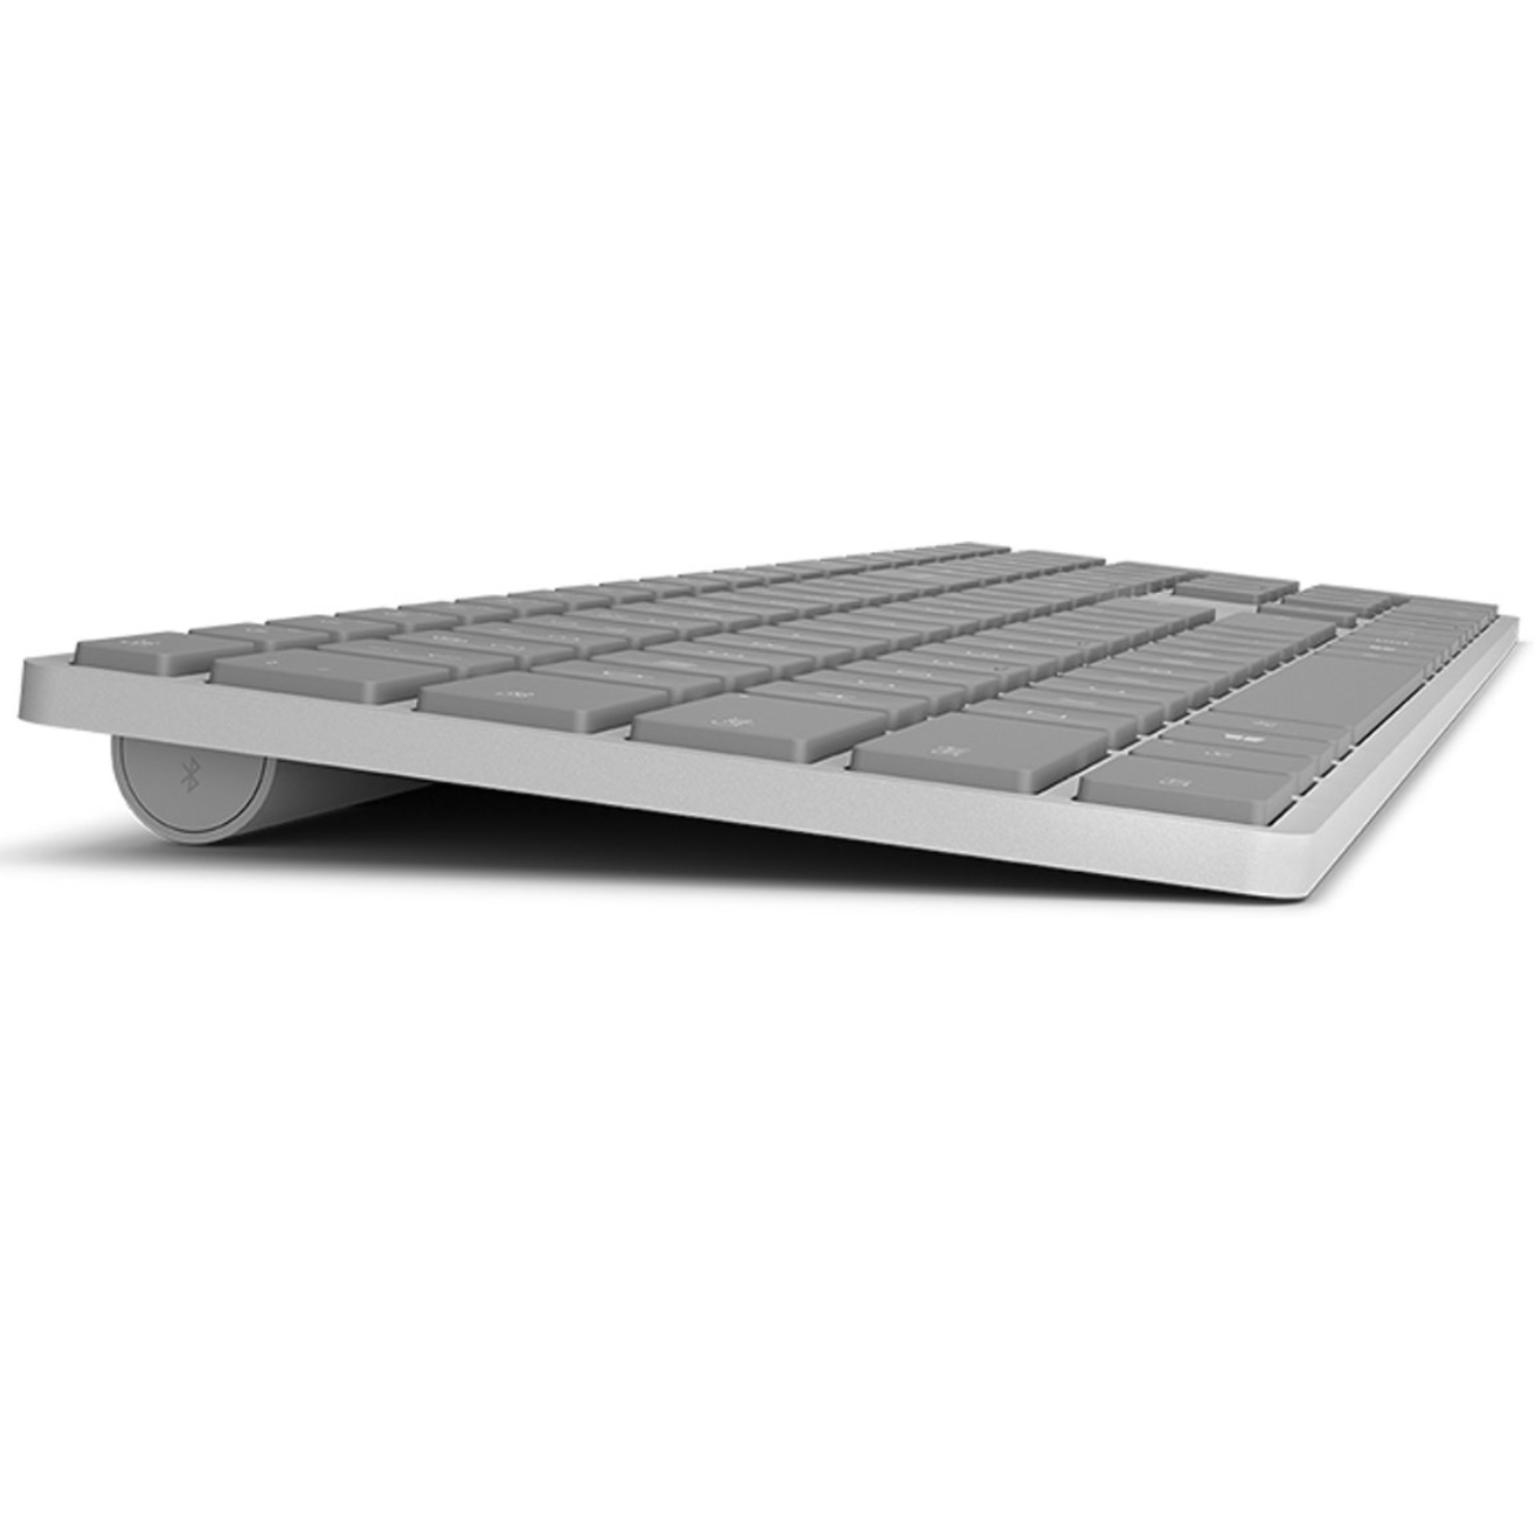 toetsenbord - Microsoft - Merk: Microsoft Surface Keyboard, Indeling: QWERTY - over membrane, Aansluiting: Bluetooth, Extra: Multimediatoetsen, Voeding: 2xAAA batterijen (incl).